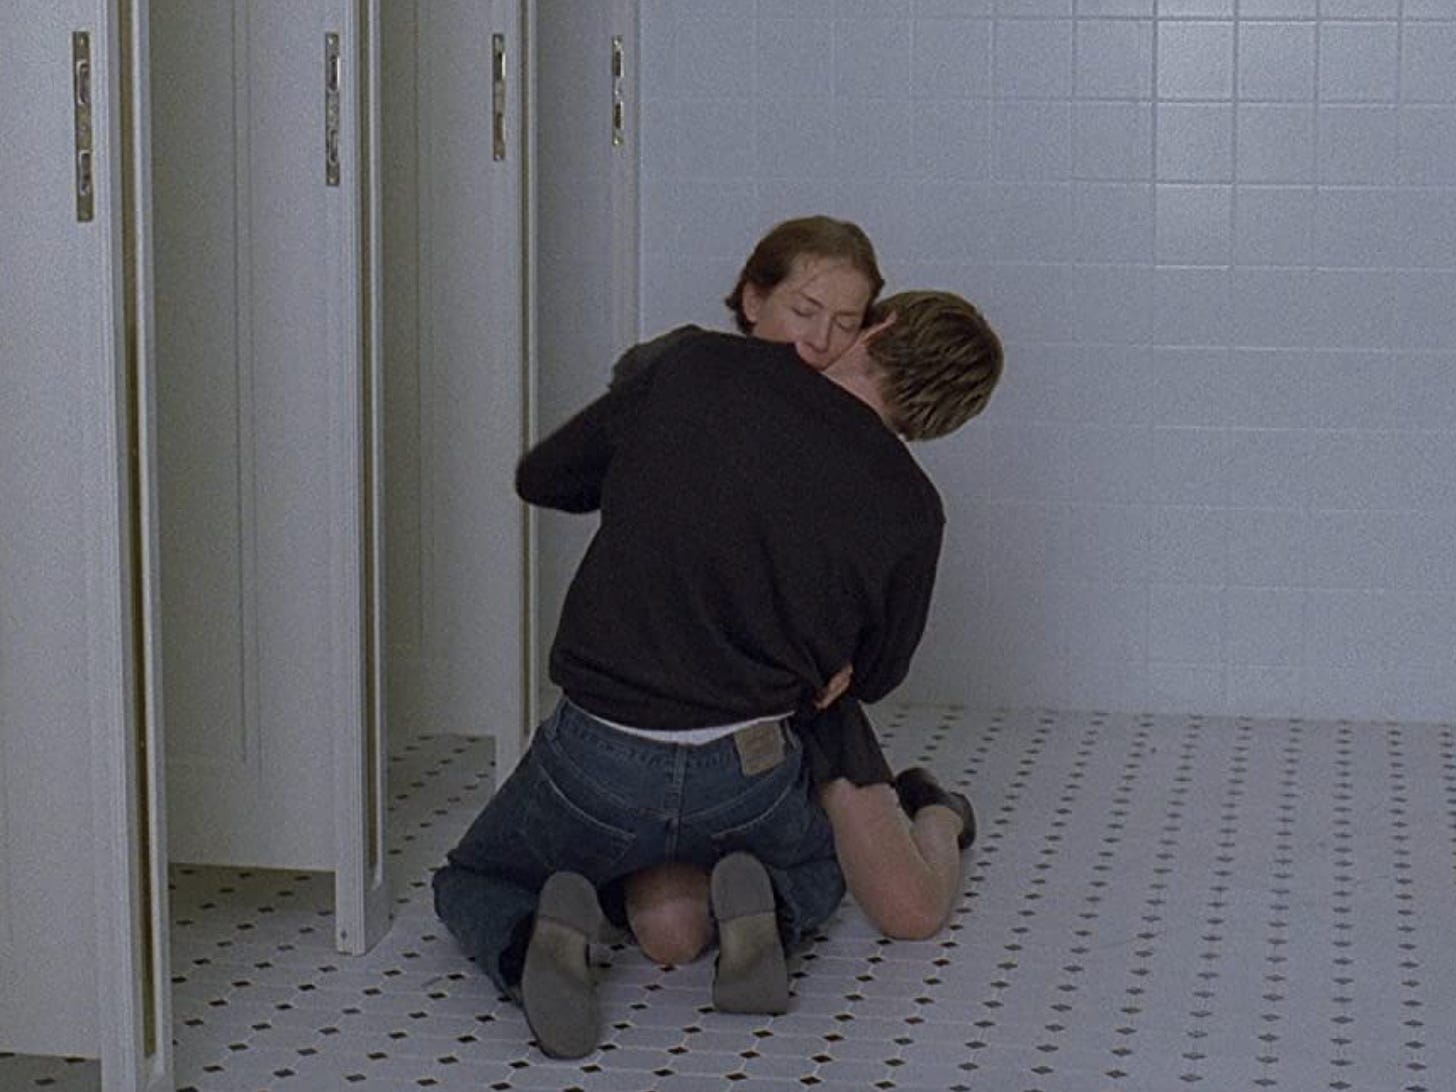 Isabelle Huppert embracing Benoit Magimel in a white-tiled bathroom.